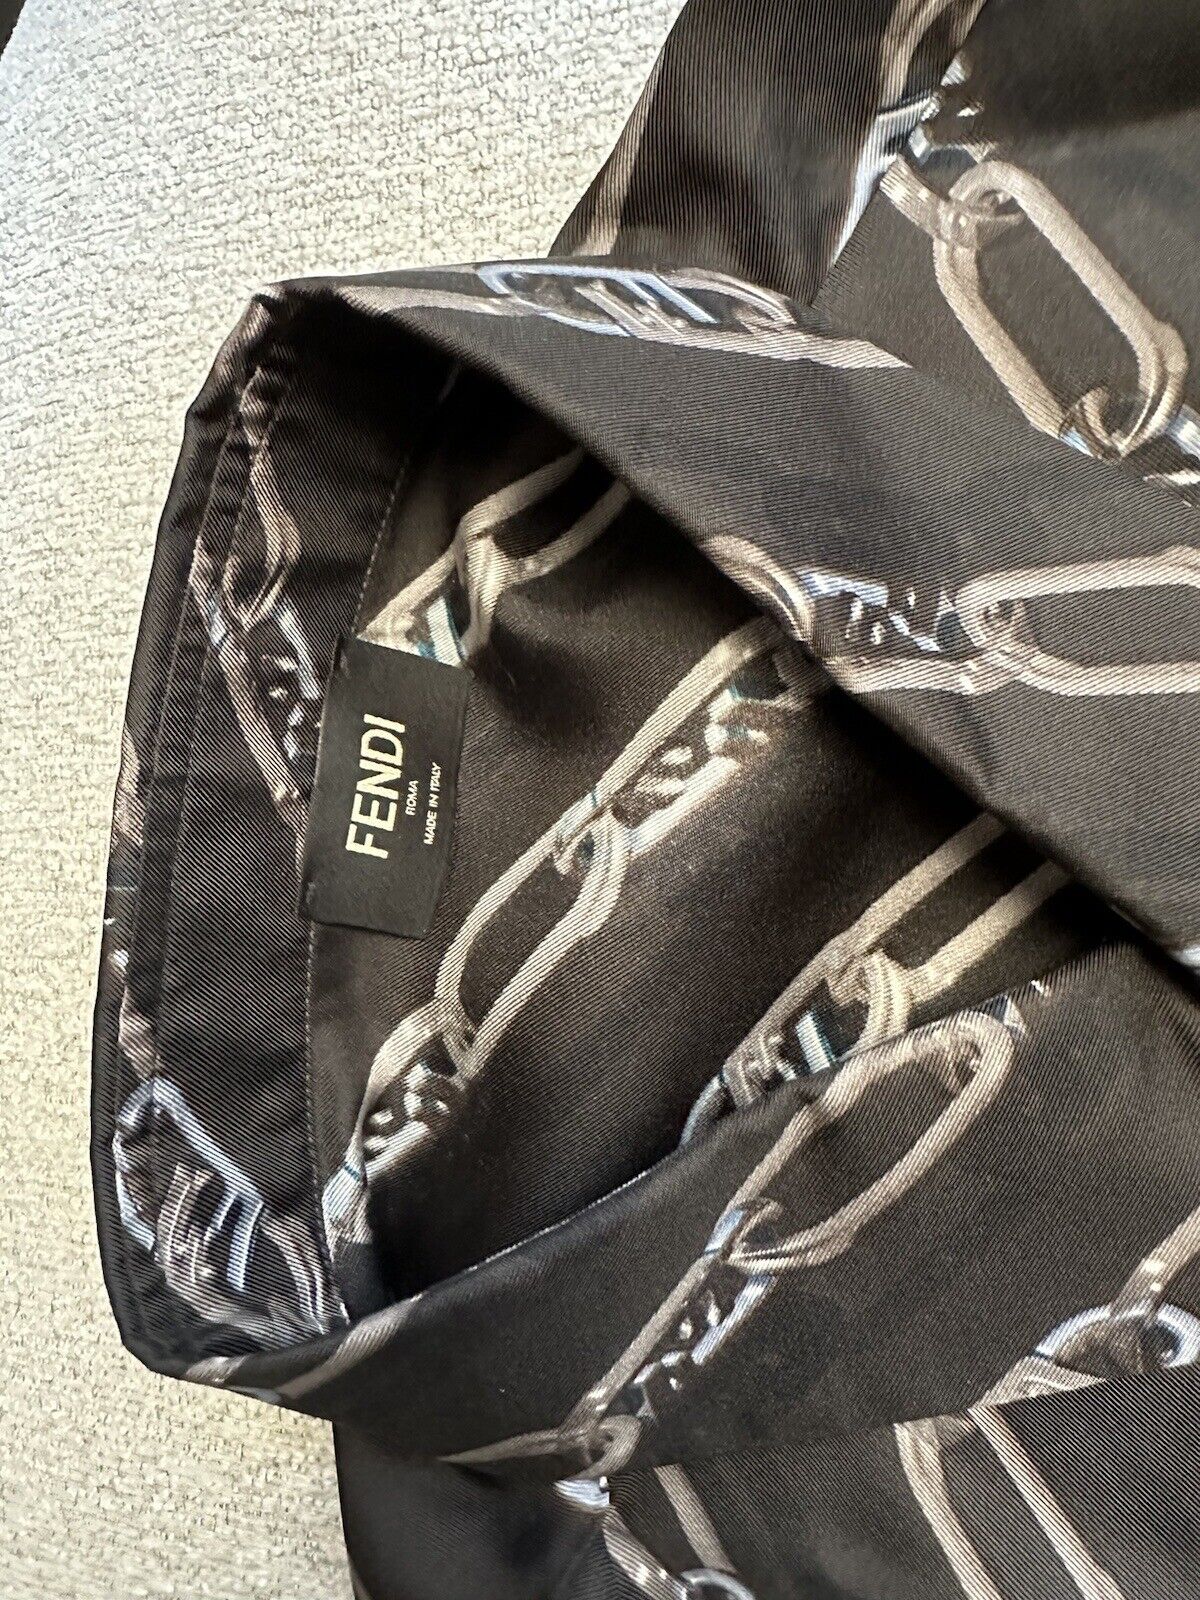 NWT $1390 Fendi Chain Print Silk Long Sleeve Dress Shirt Pewter 43 FS0585 IT